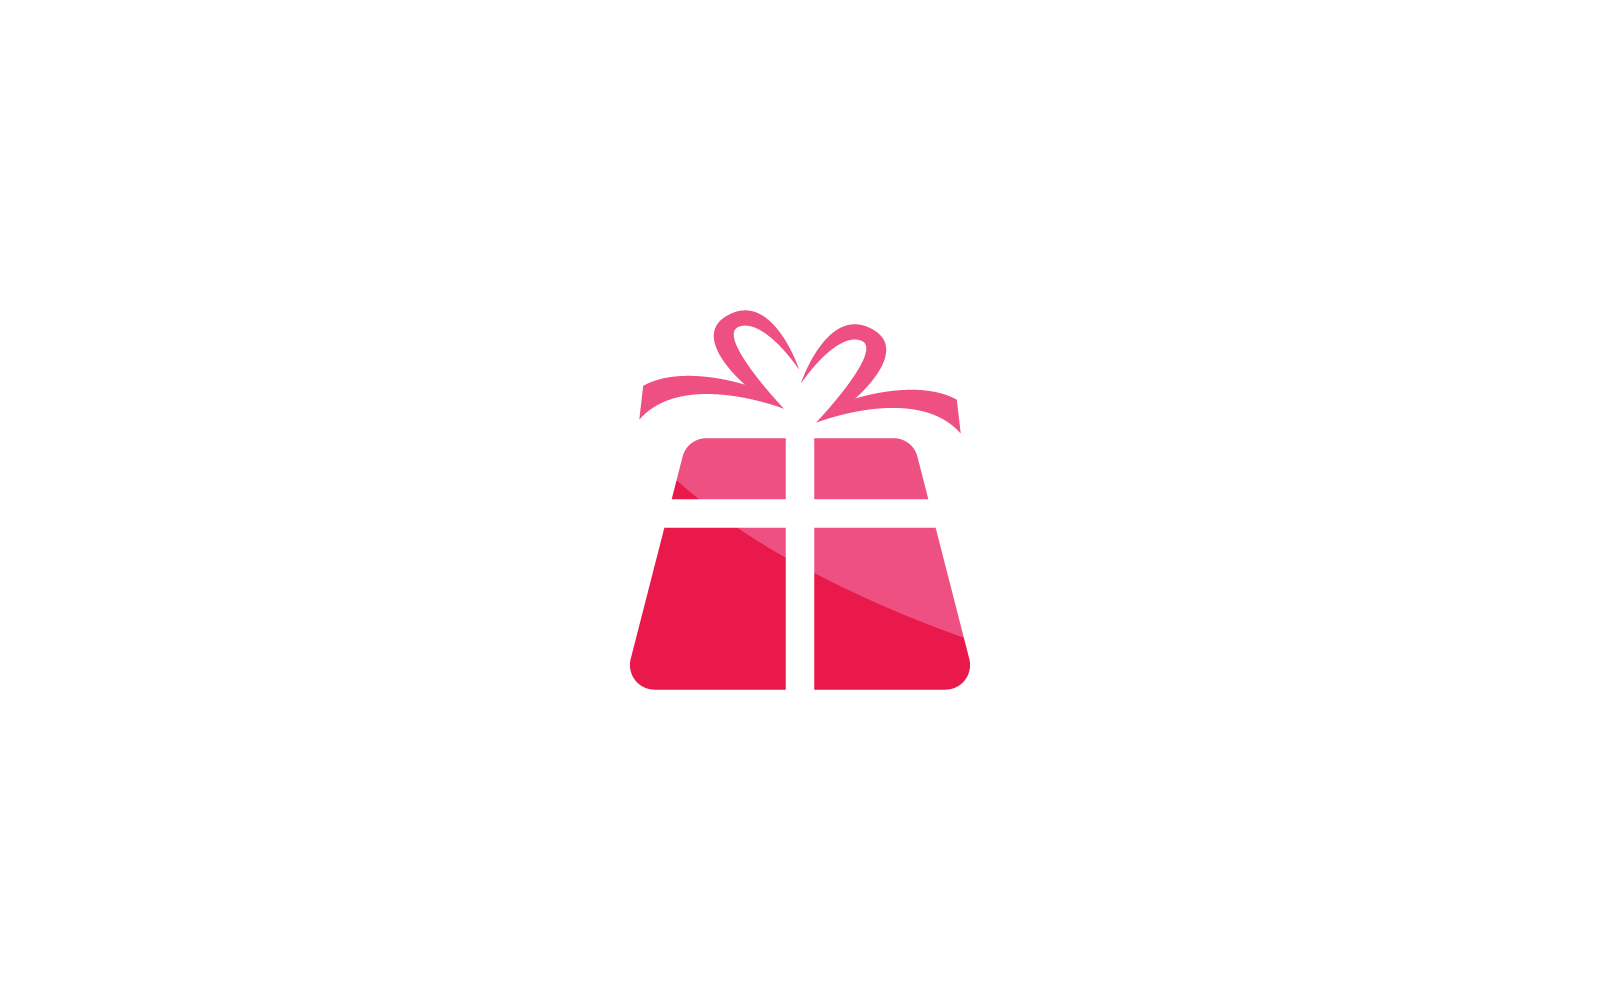 Gift Box, gift shop logo icon design